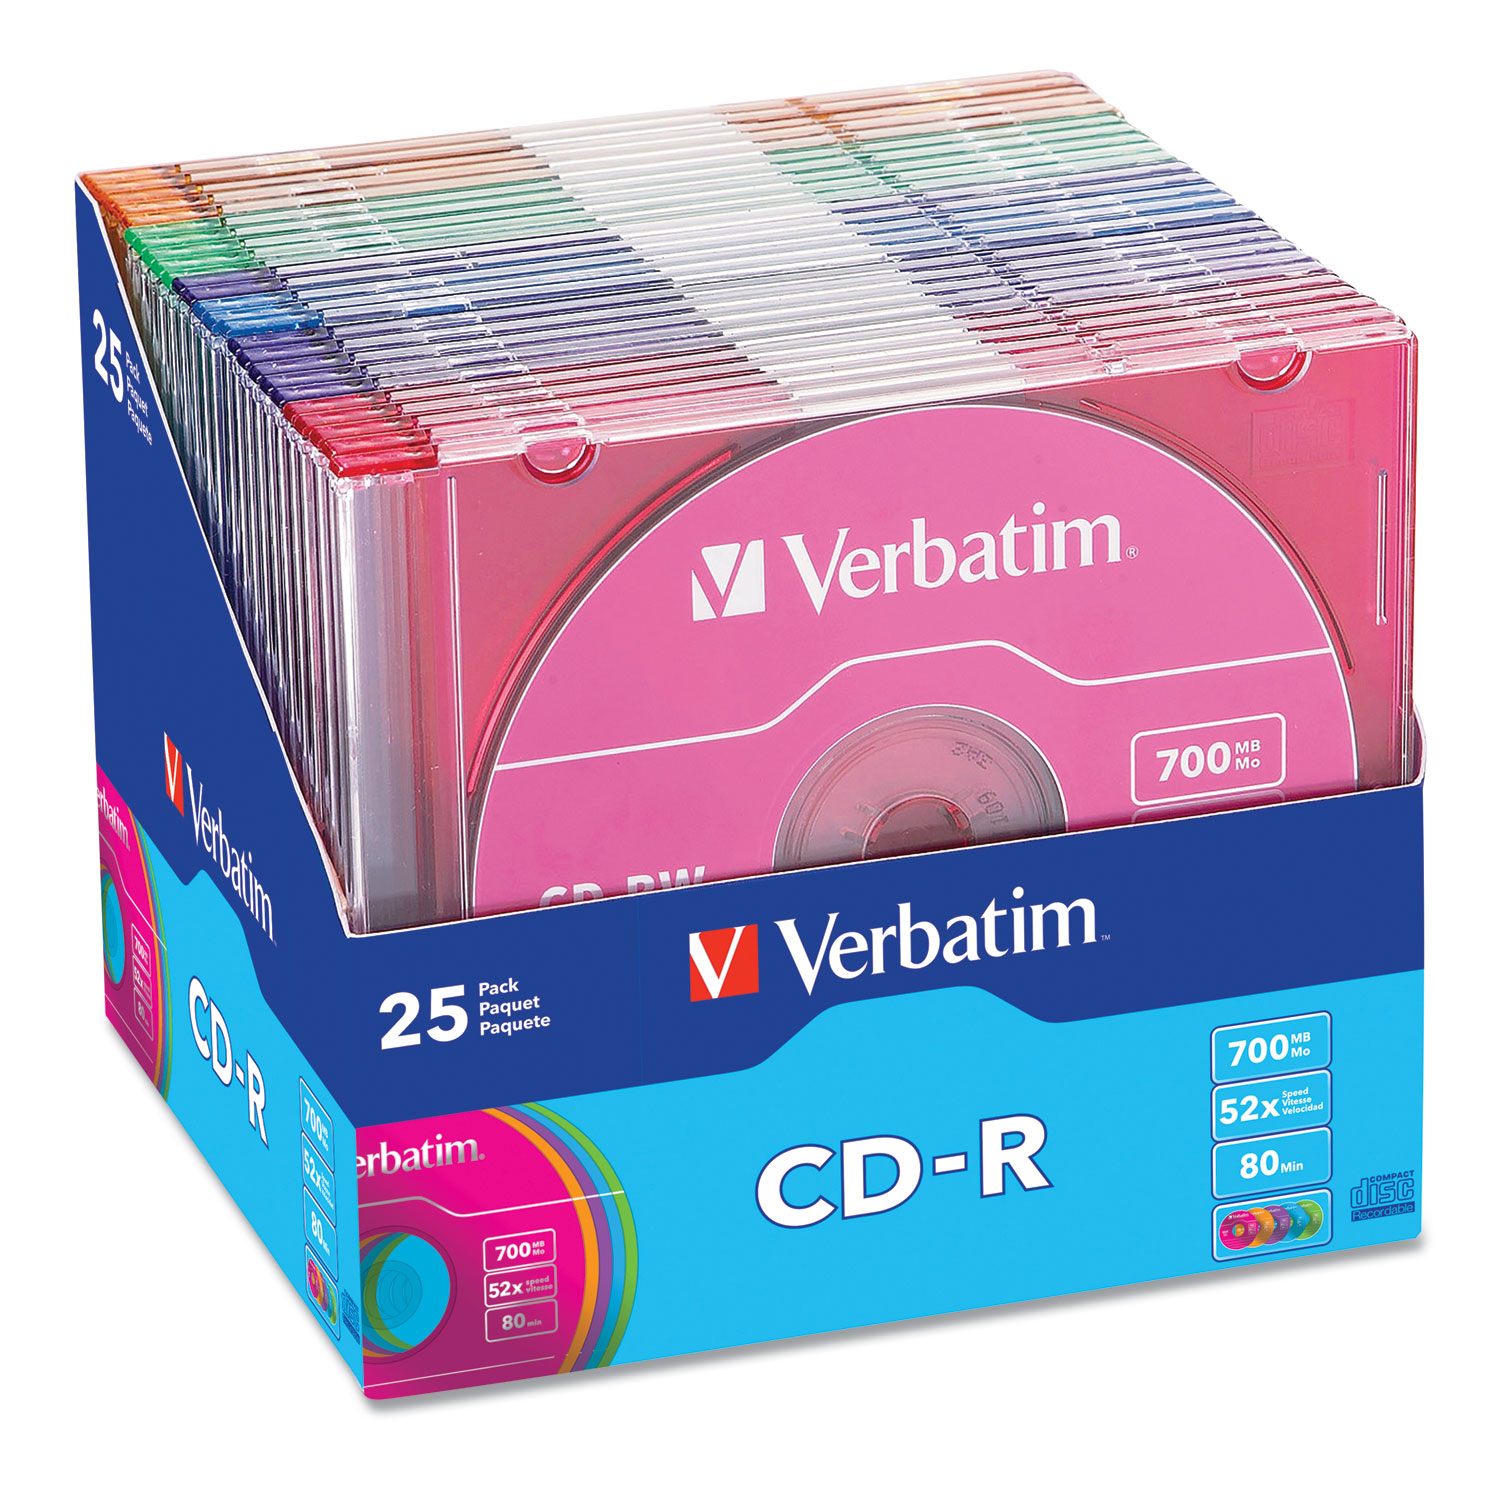  Verbatim 94611 CD-R Discs, 700MB/80min, 52x, Slim Jewel Cases, Assorted Colors, 25/Pack (VER94611) 